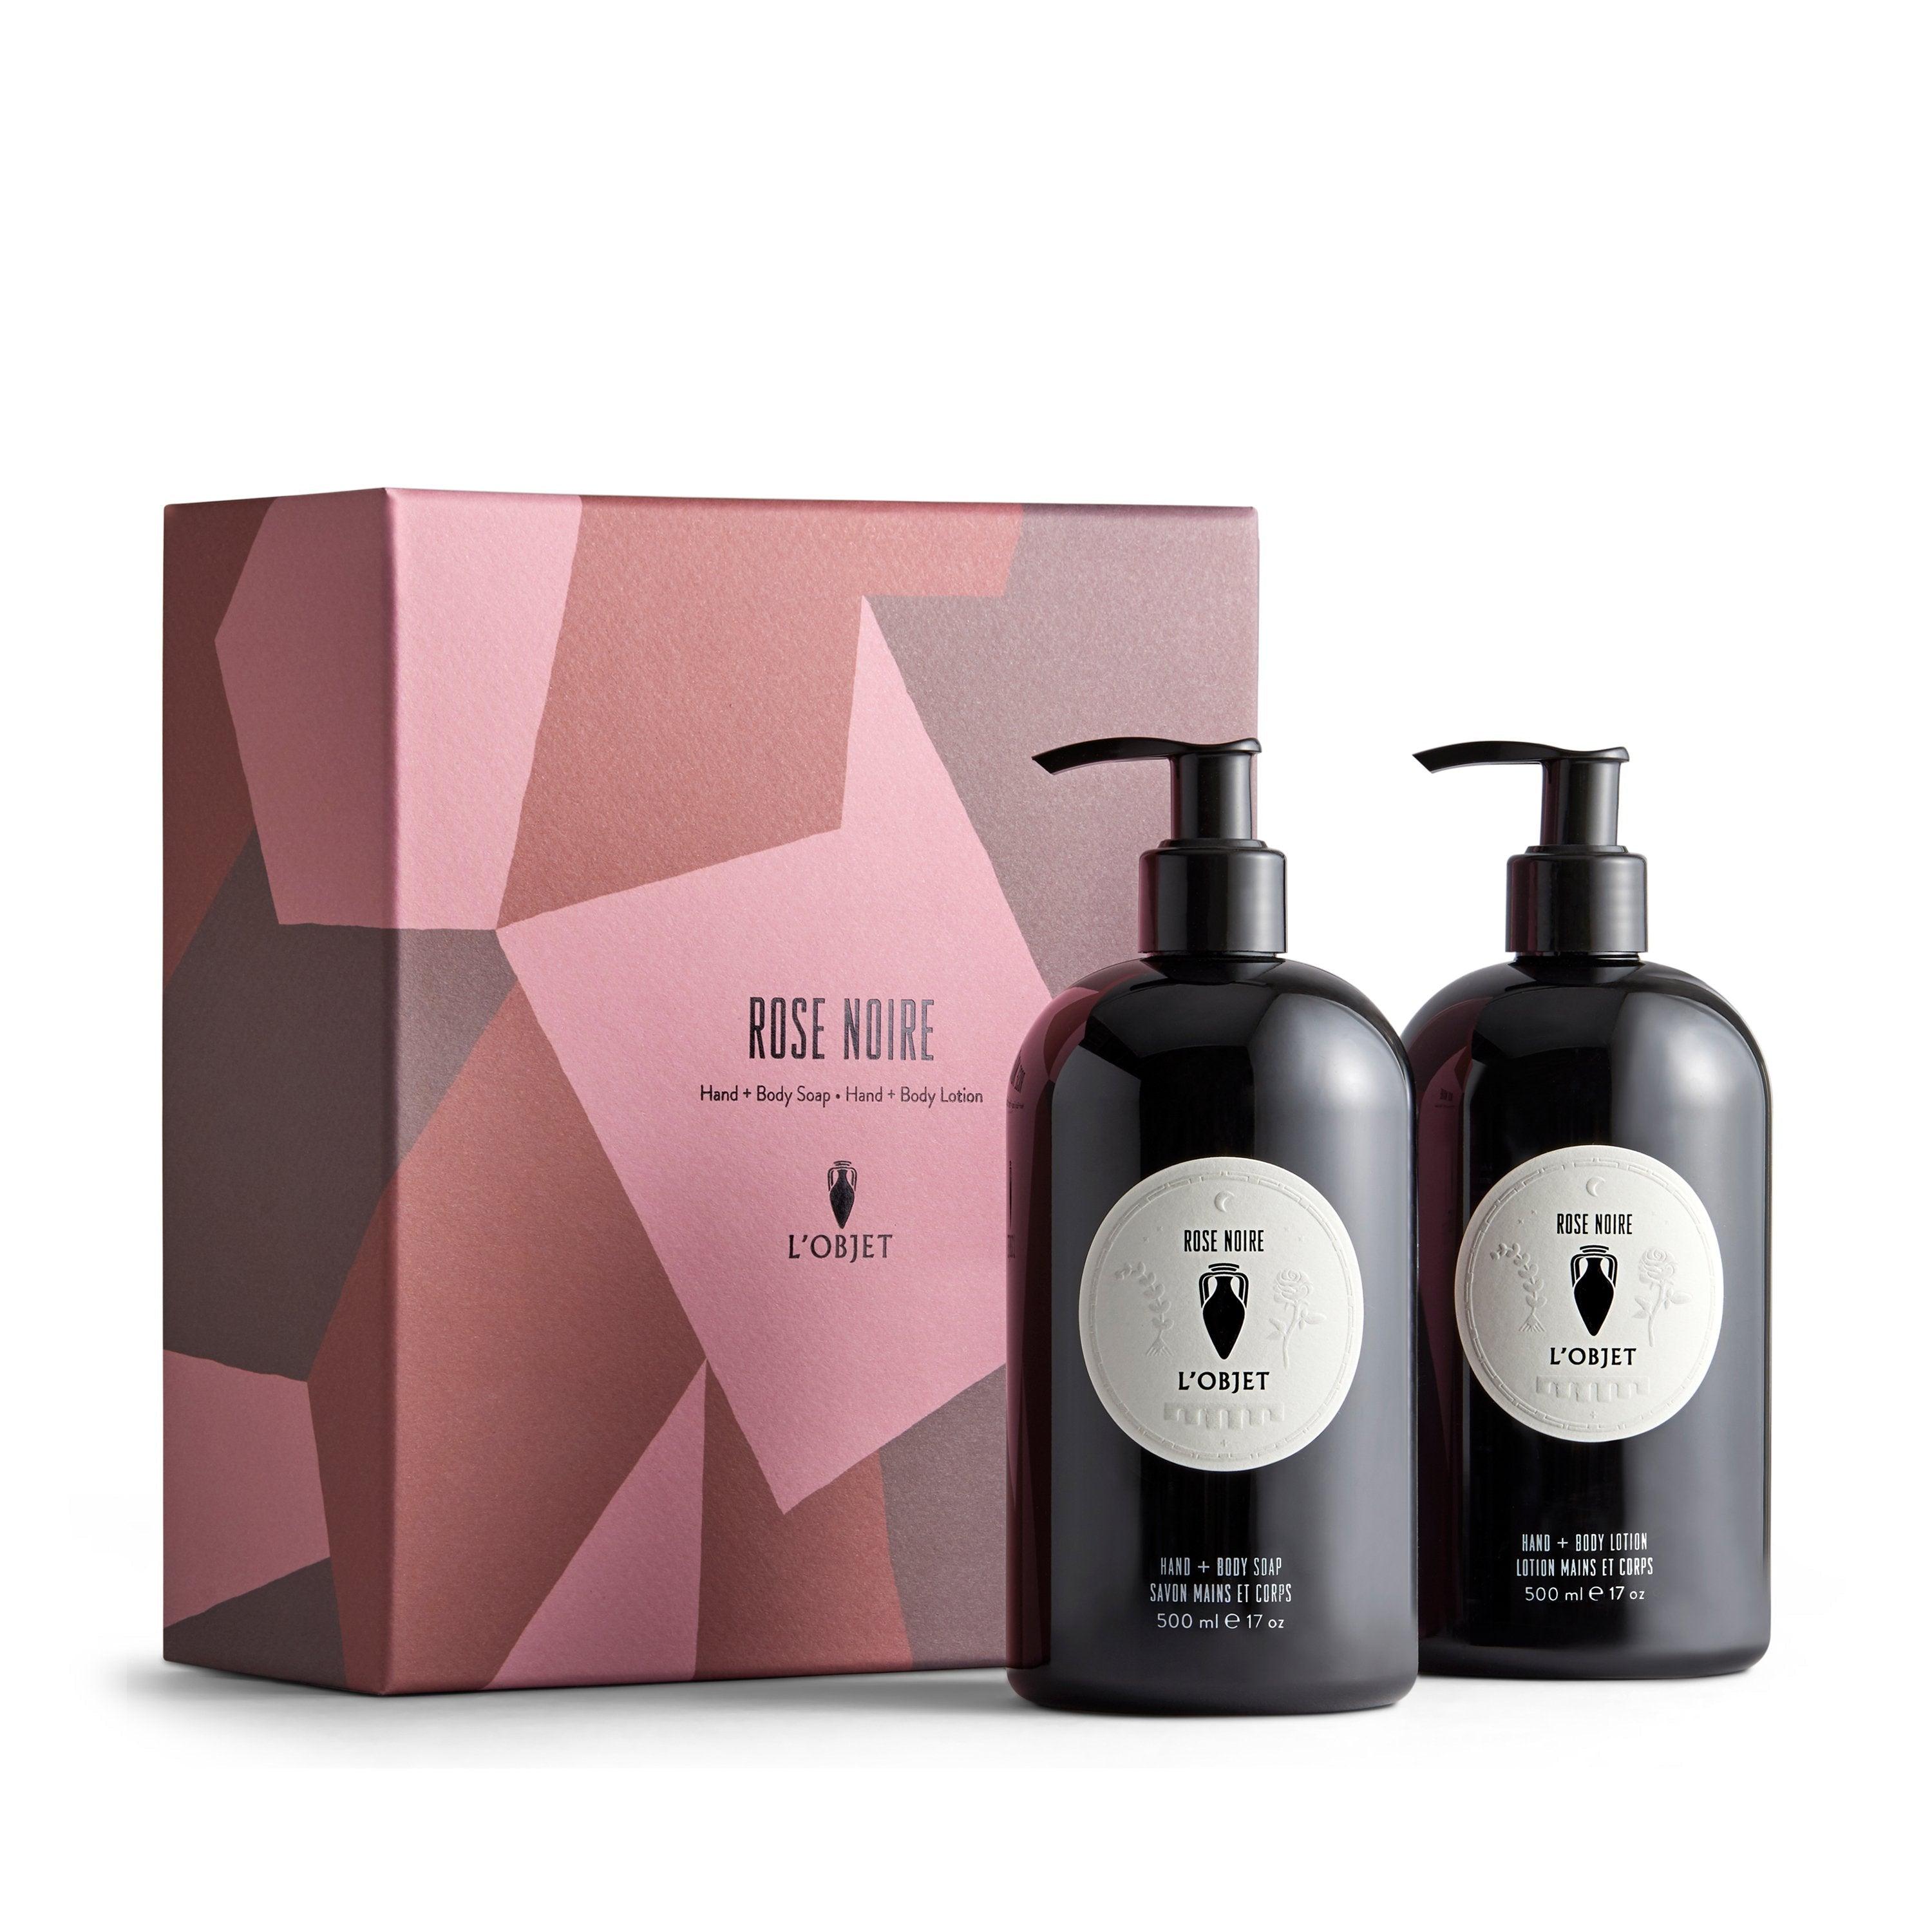 Atelier Rose Anonyme Eau de Parfum Gift Set - 200ml, Body Lotion, Shower Gel, Travel Spray